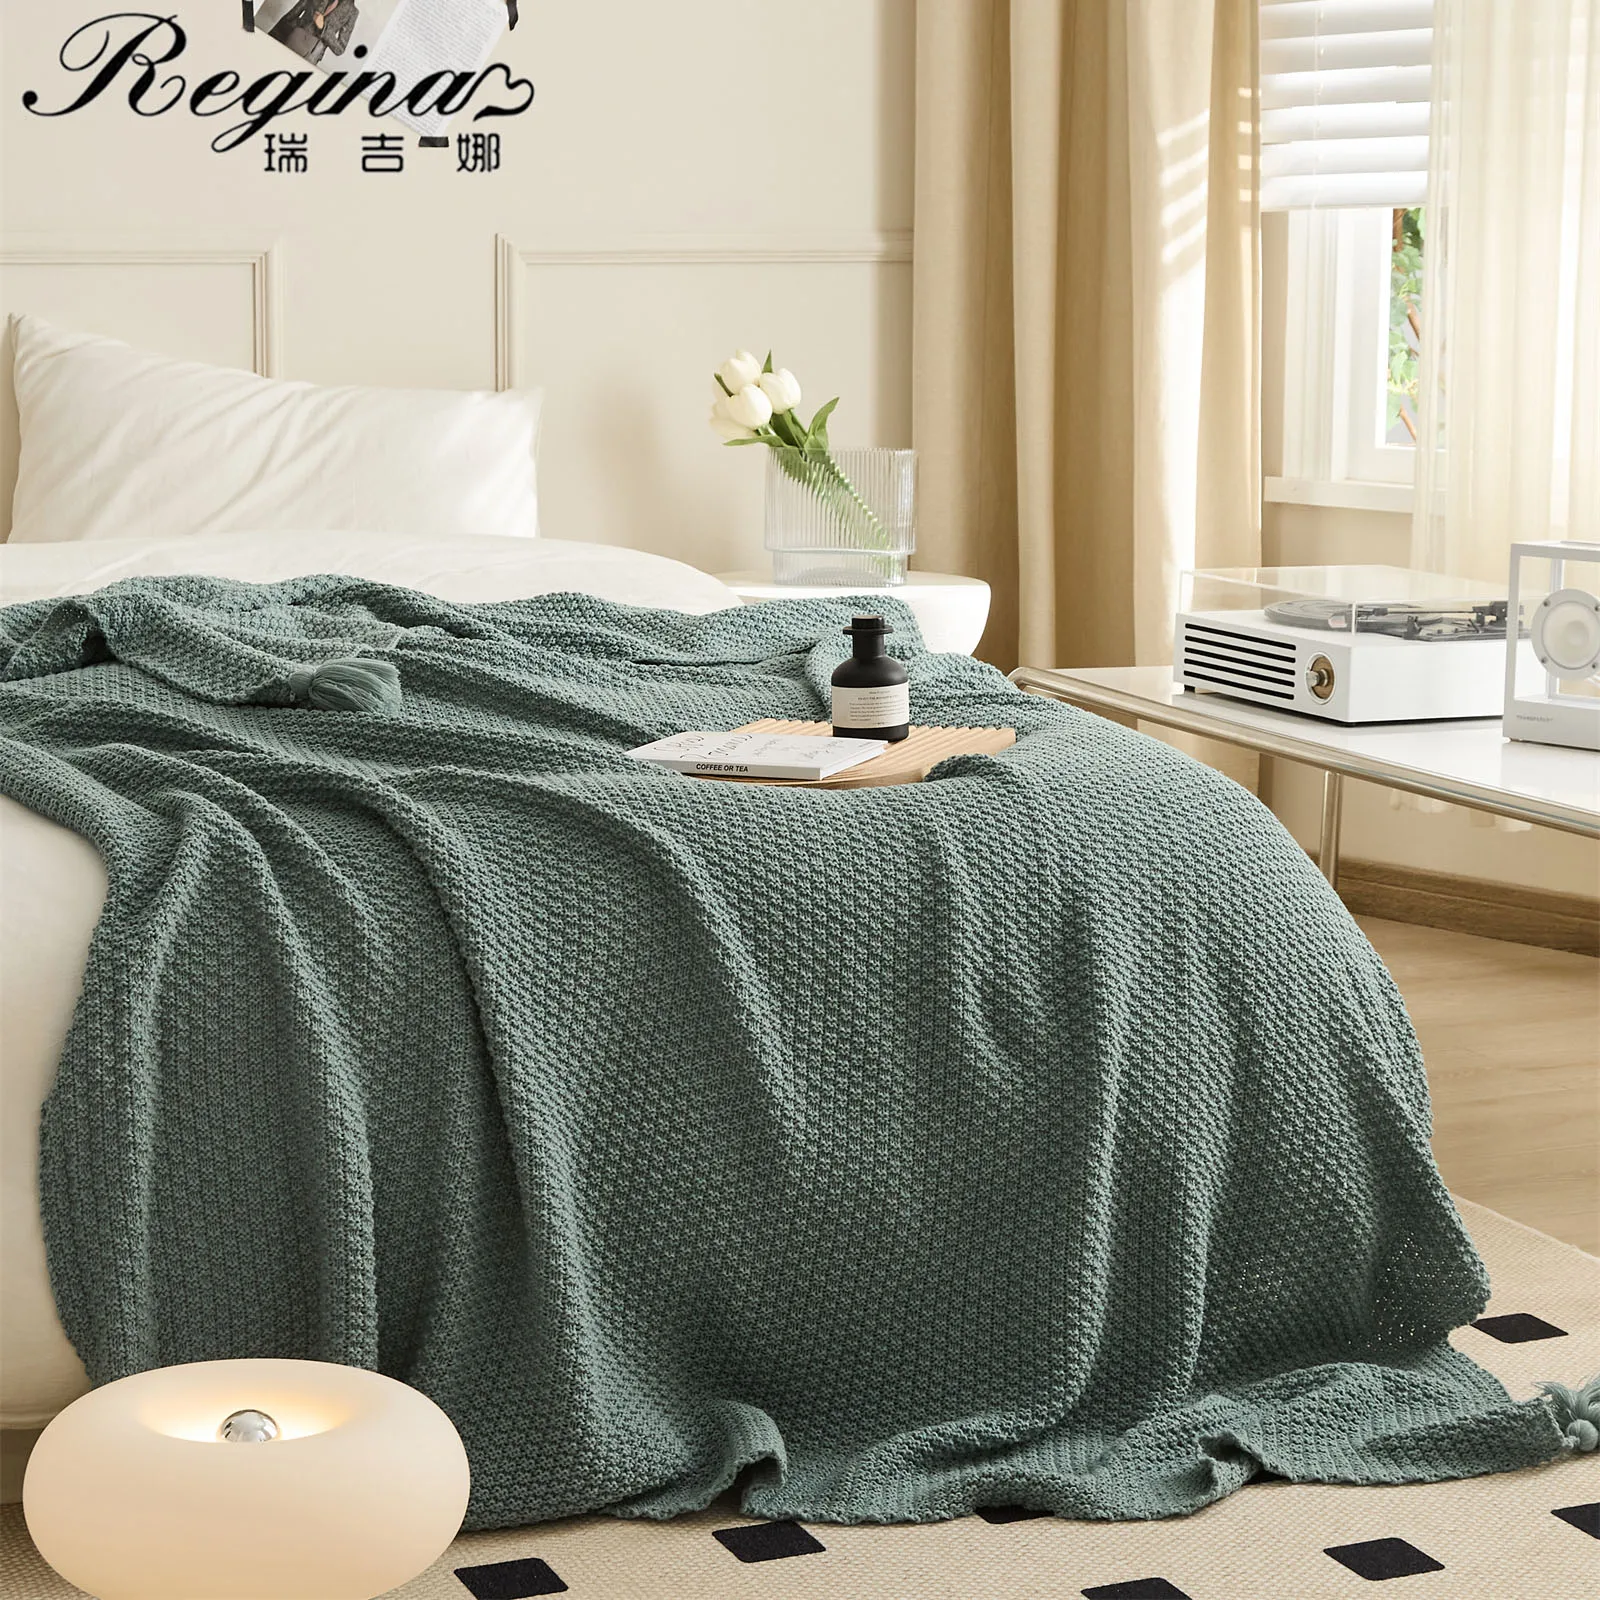 REGINA Brand Nordic Acrylic Knitted Blanket Soft Tassels Mossstitch Design Child Adult Warm Shawl Knee Wrap Sofa Bed TV Blankets